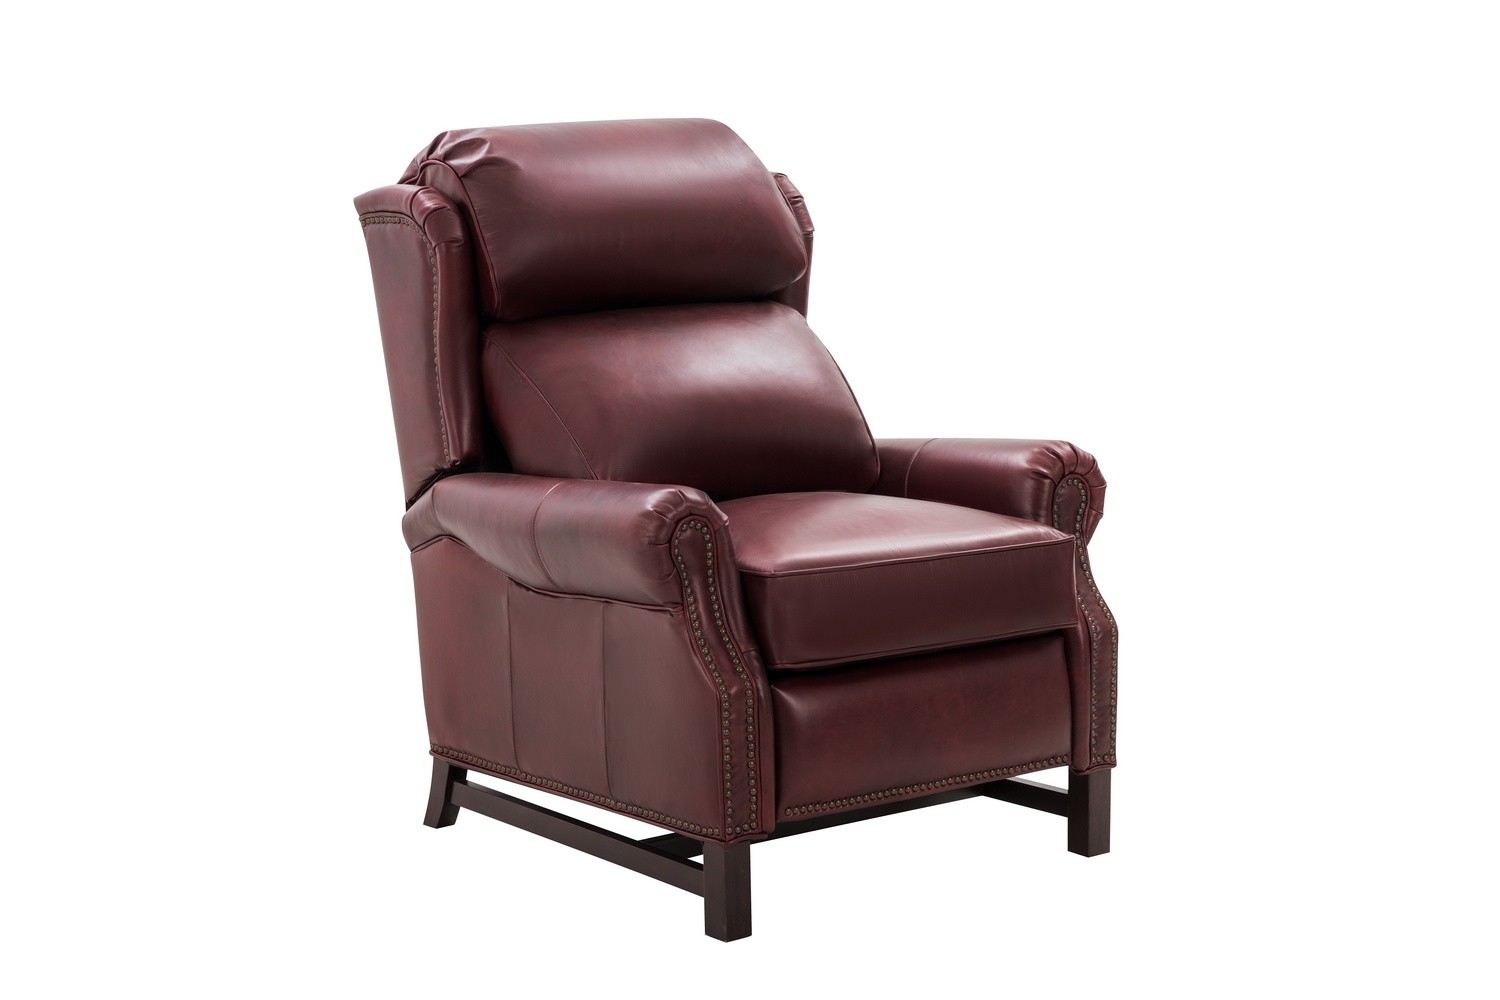 Barcalounger Thornfield Recliner Chair - Emerson Sangria/Top Grain Leather